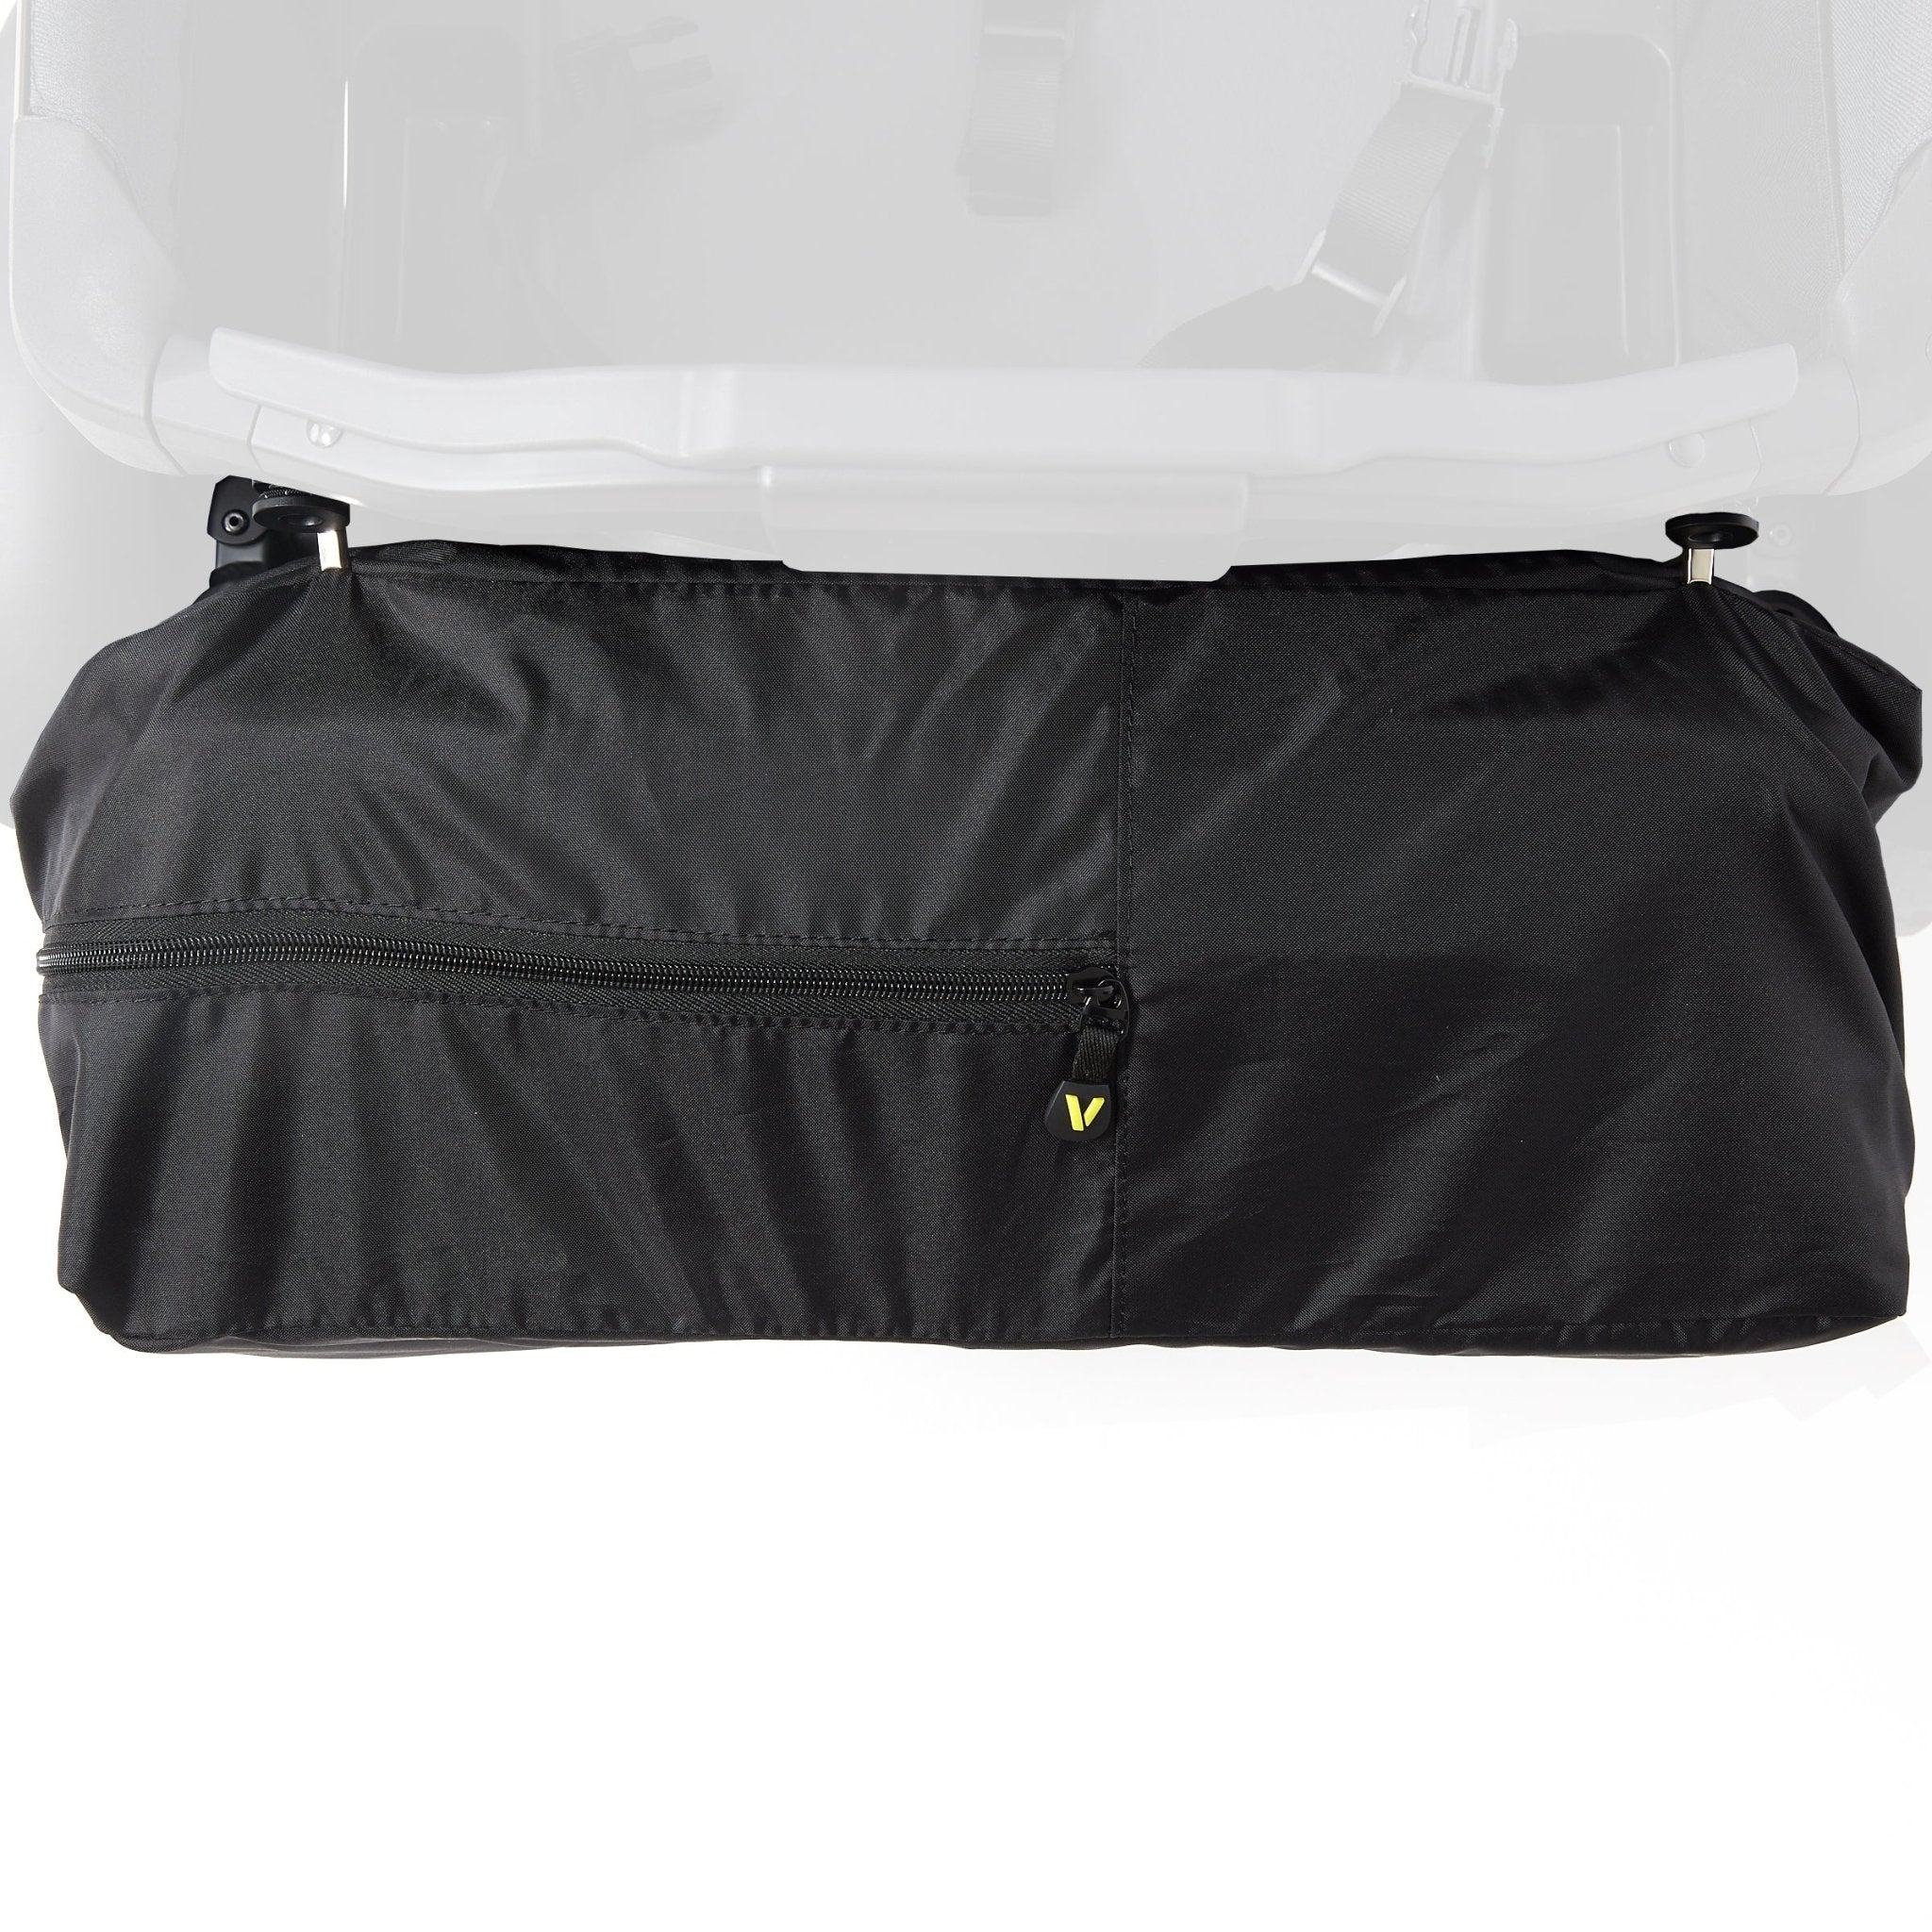 Veer Cruiser Nap System, Black - ANB Baby -storage bag